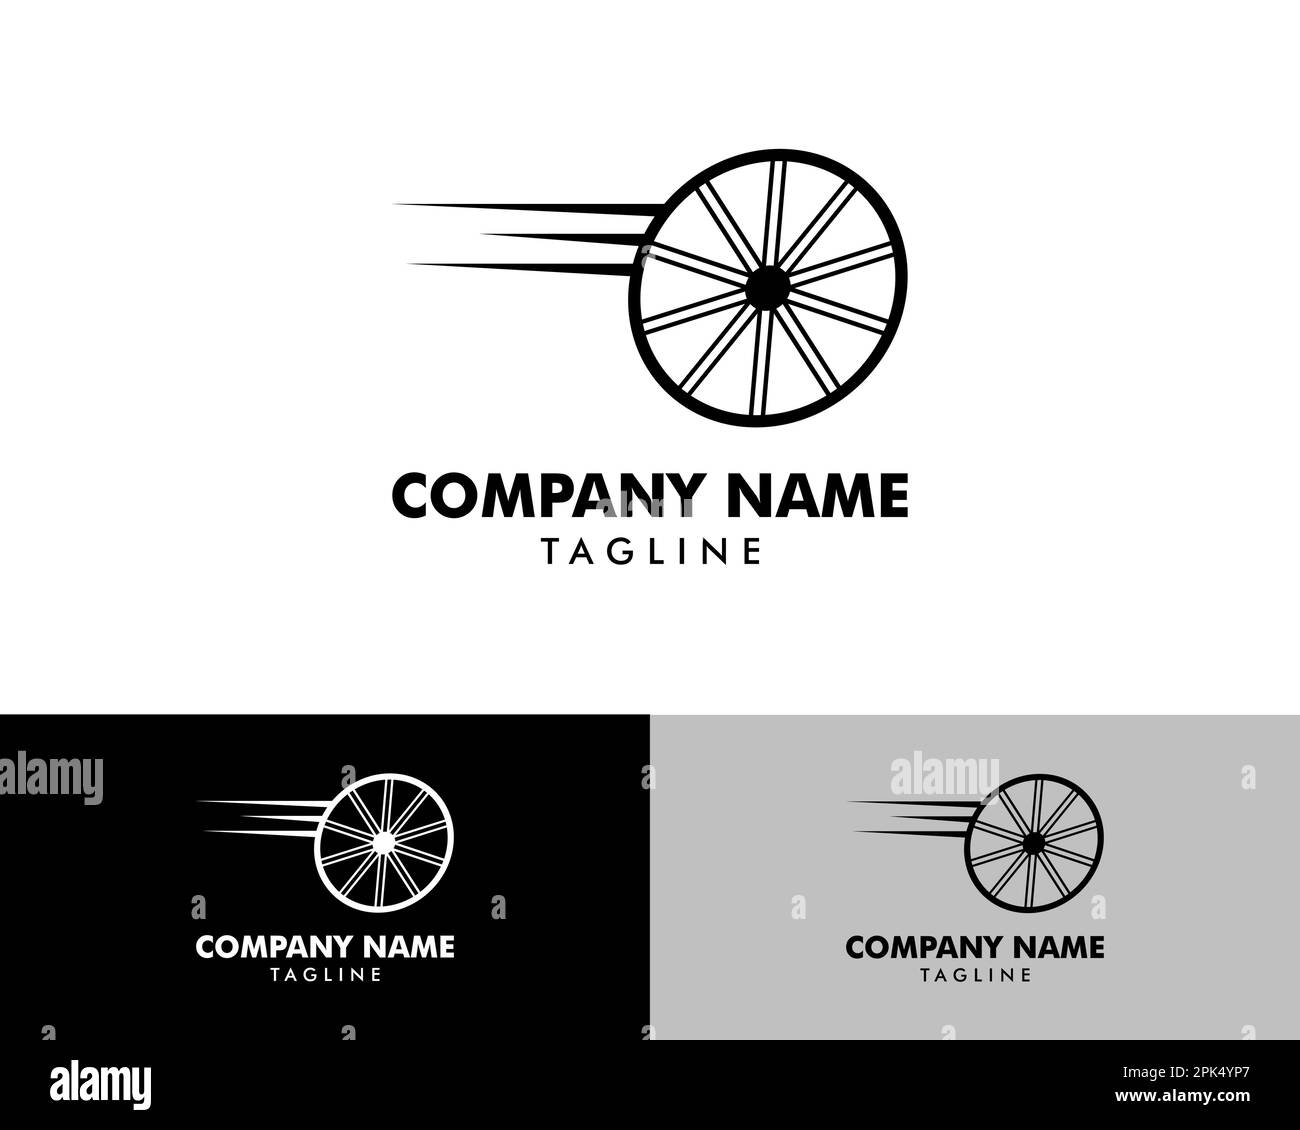 Bicycle Tire Logo Design Element Stock Vector